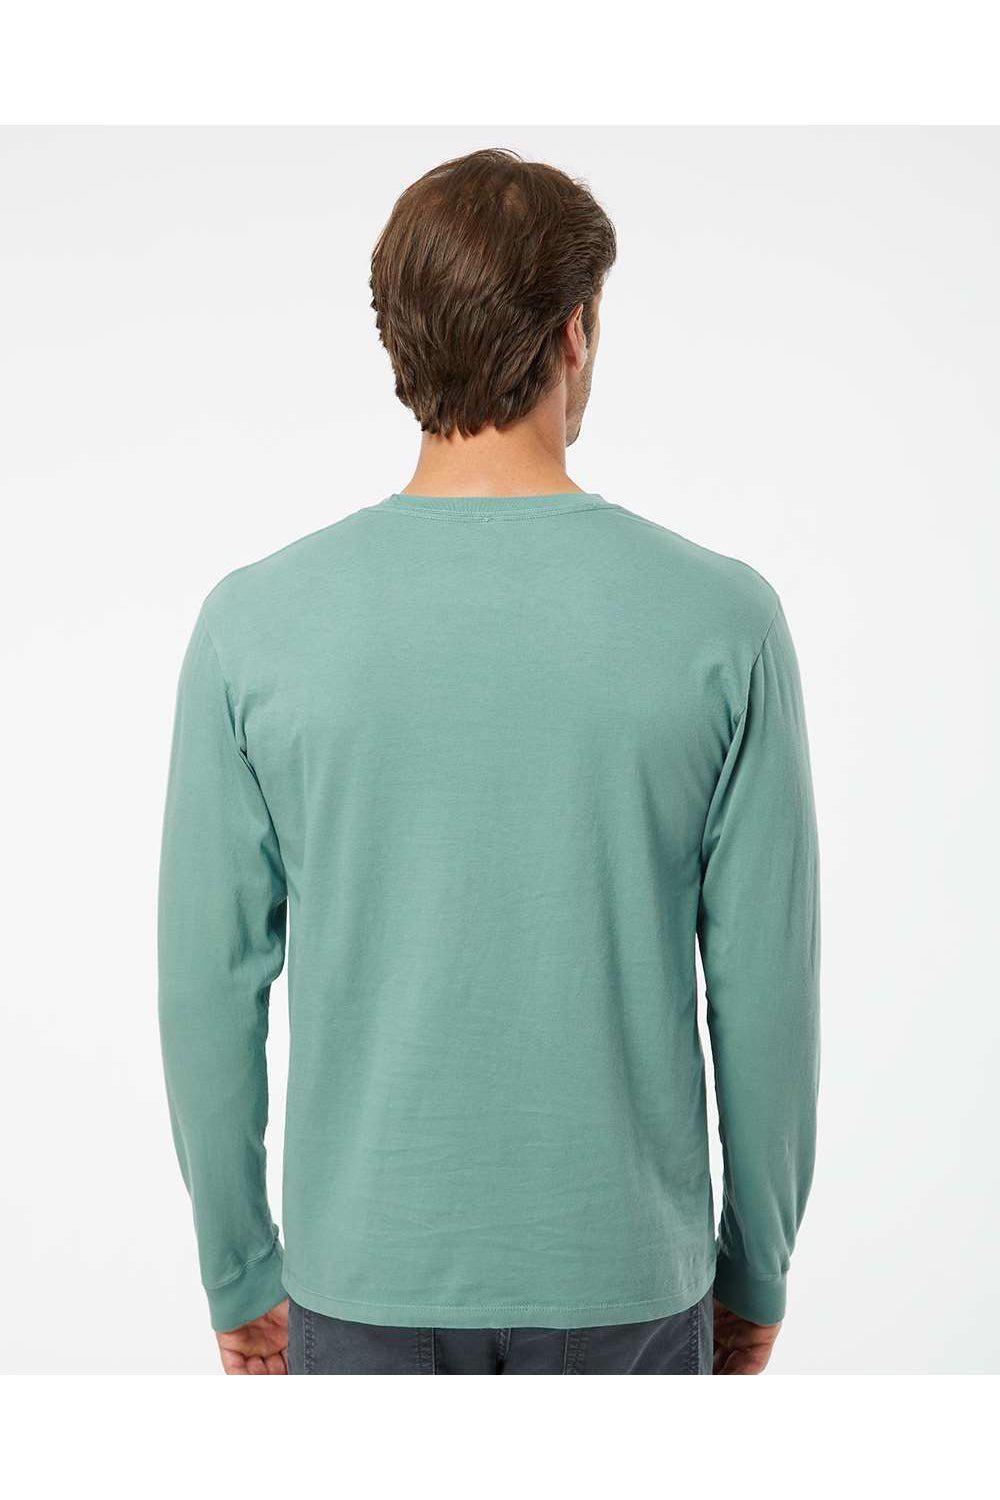 SoftShirts 420 Mens Organic Long Sleeve Crewneck T-Shirt Pine Green Model Back